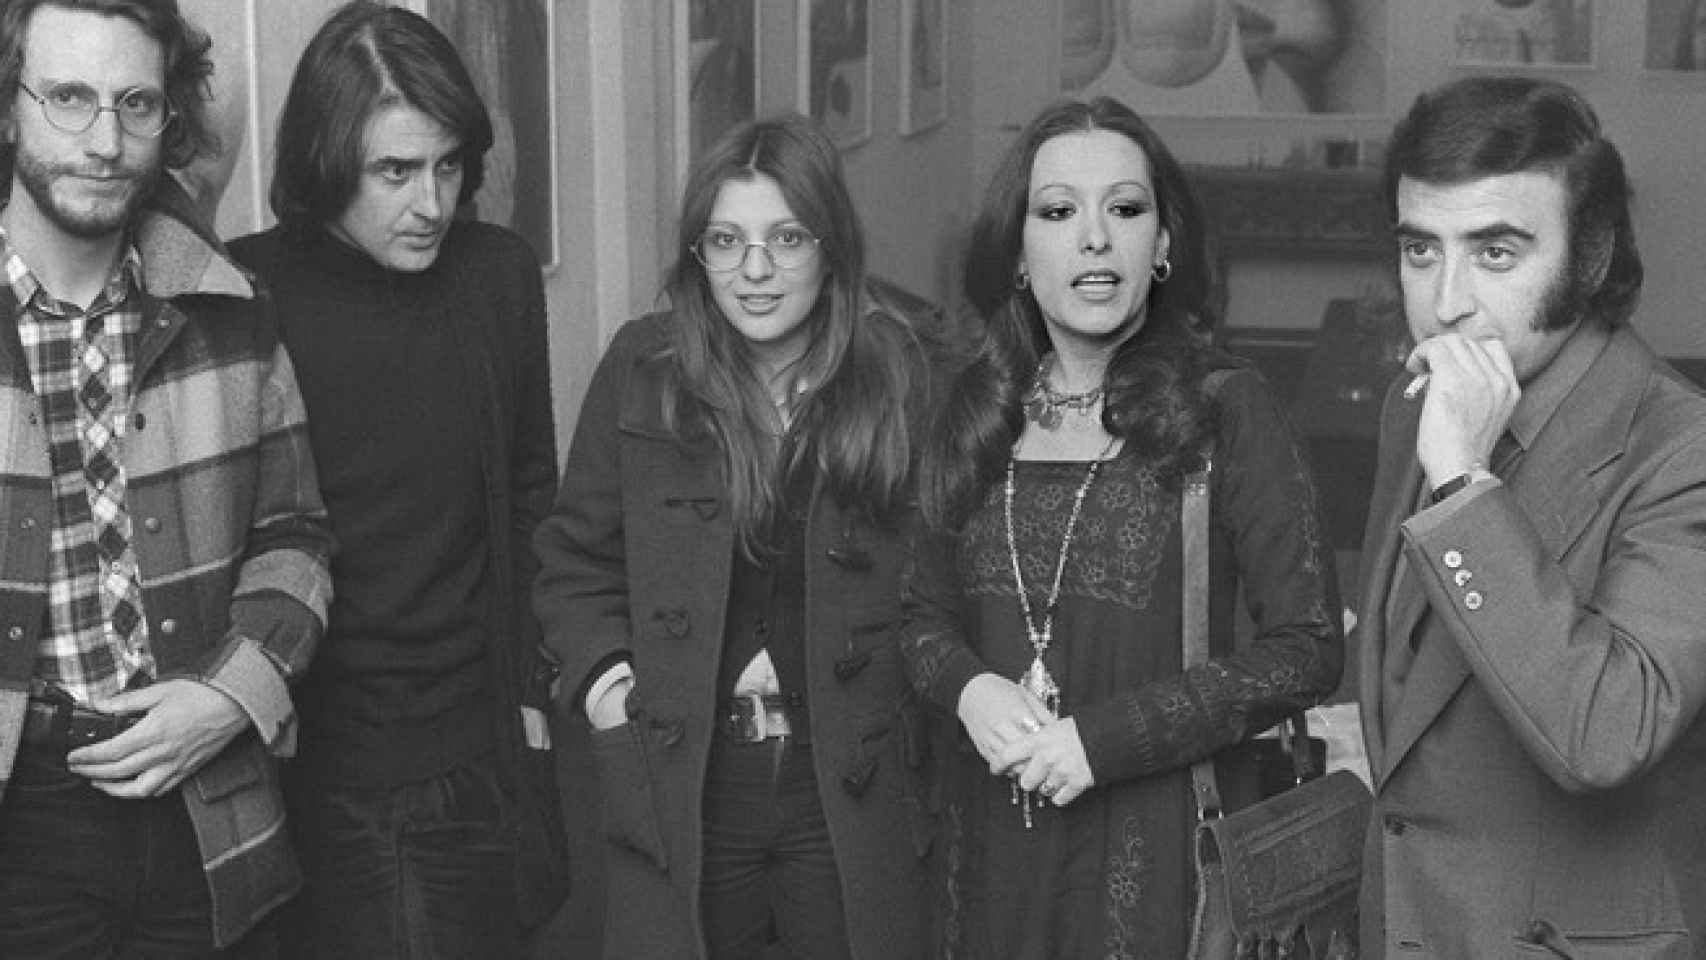 Jaime Chávarri, Aute, Rosa León, Massiel y Peret en 1974. EFE-